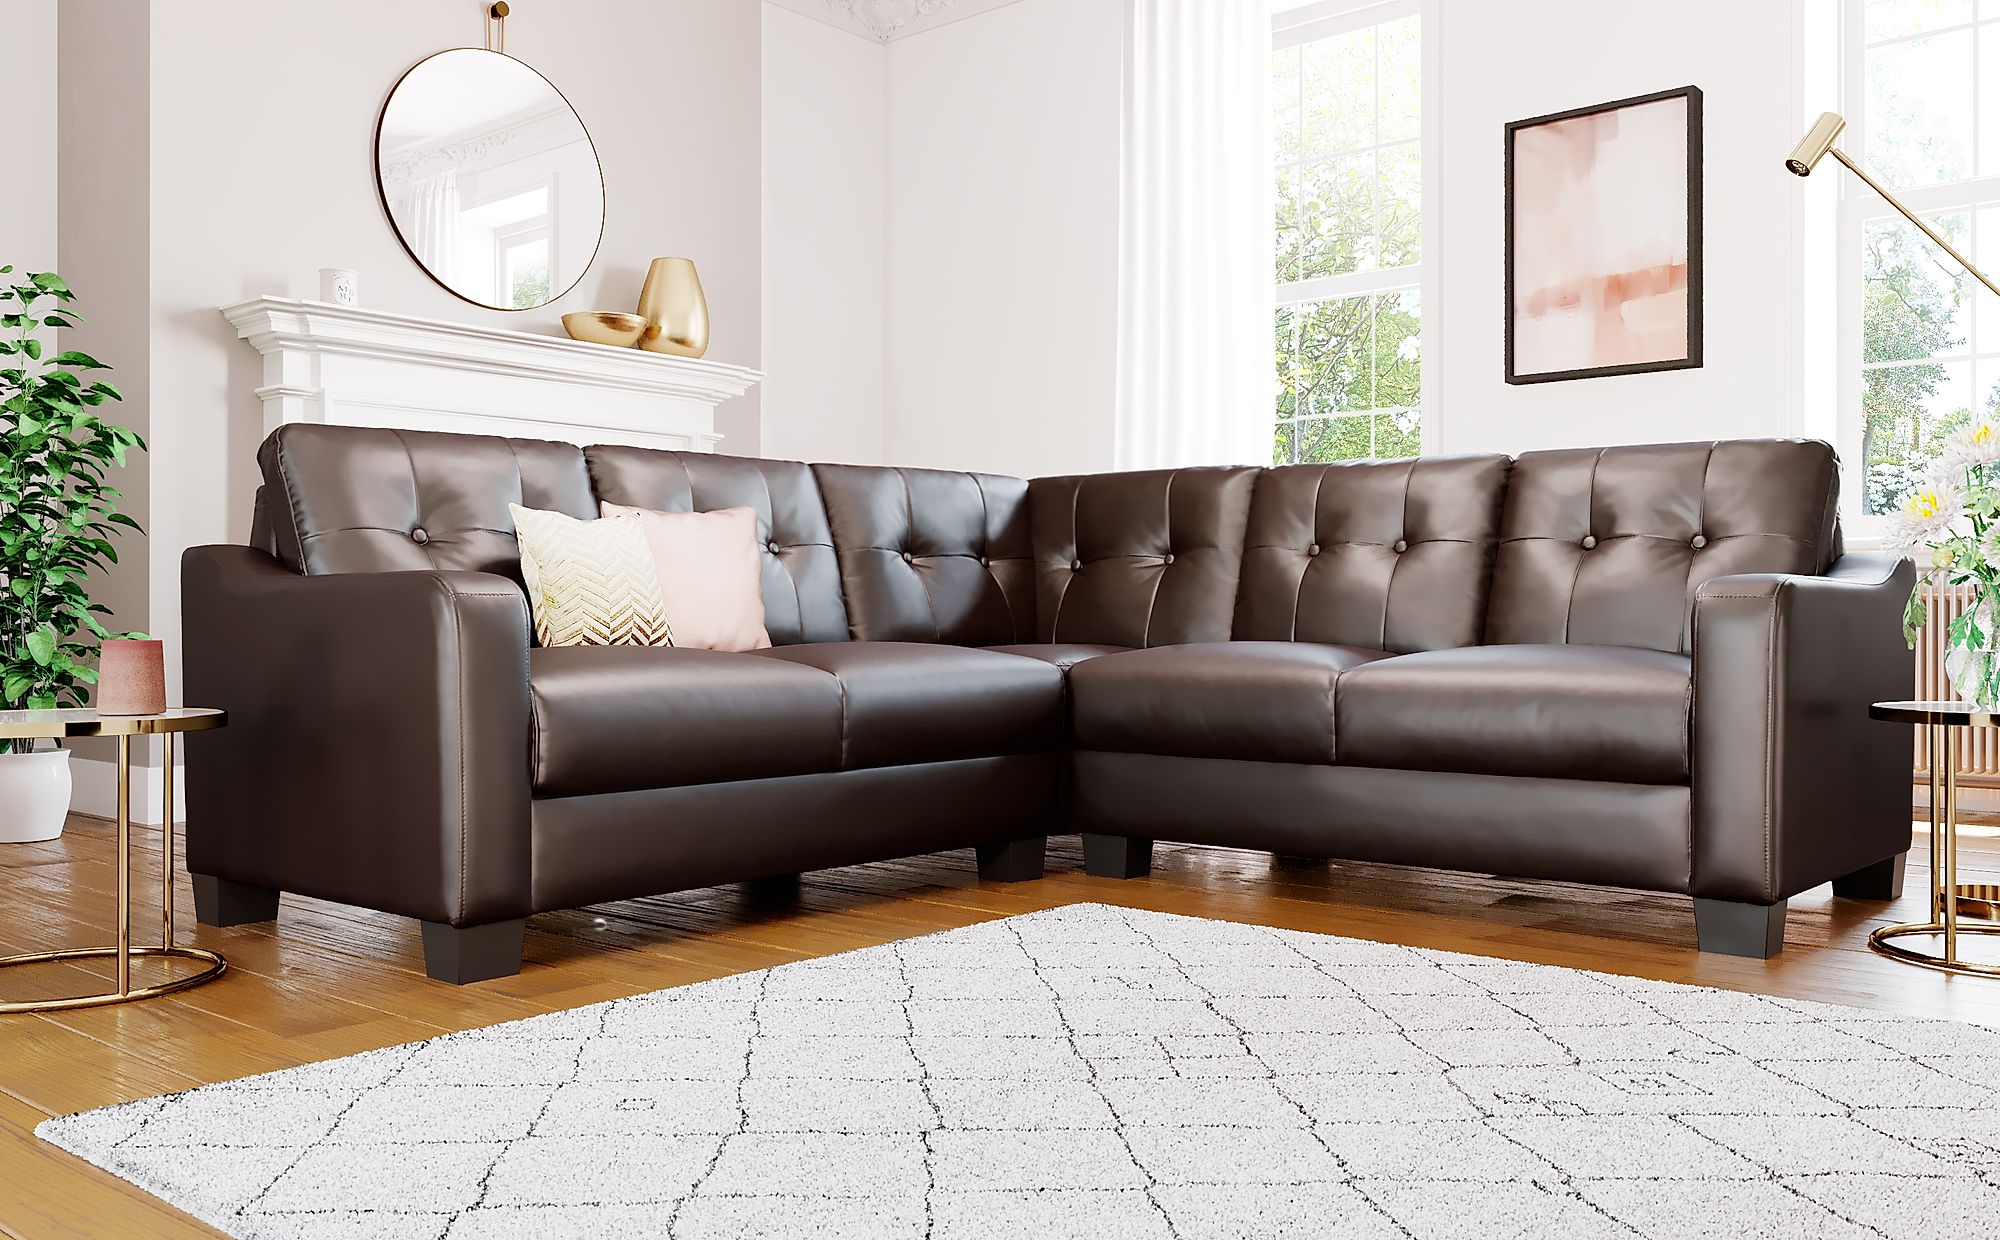 brown leather corner sofa left hand